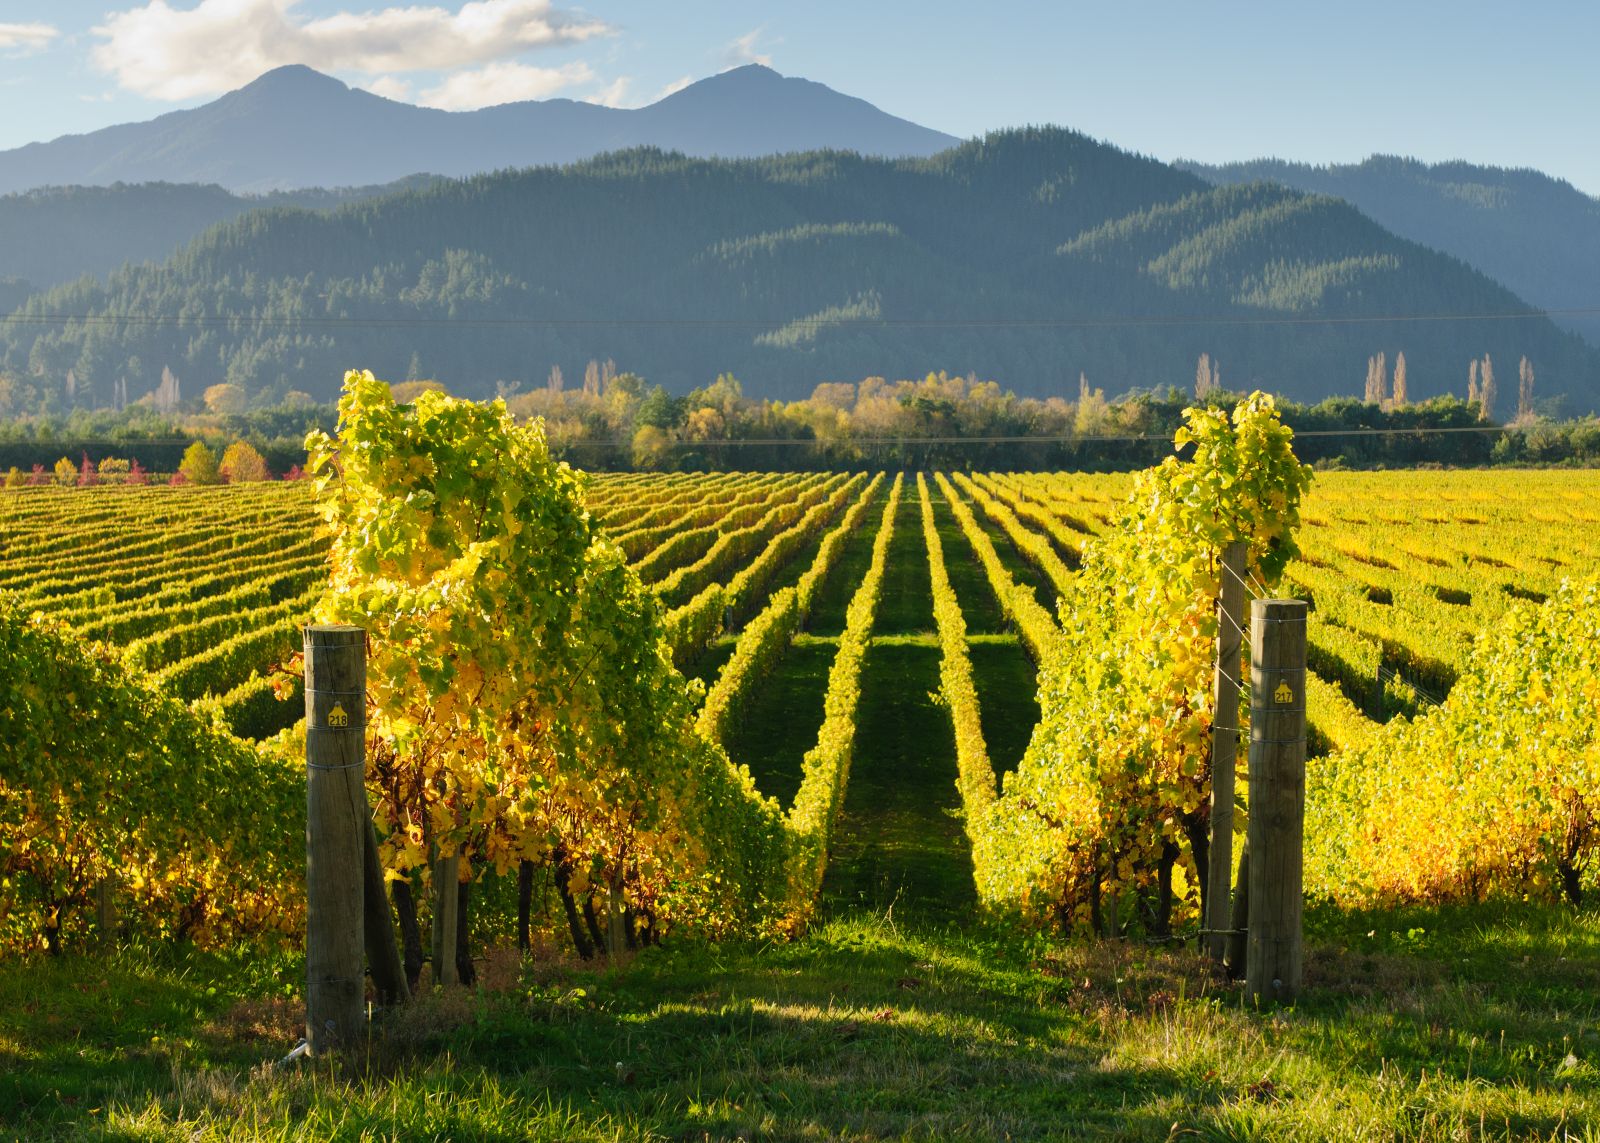 Rolling vineyards of Marlborough New Zealand